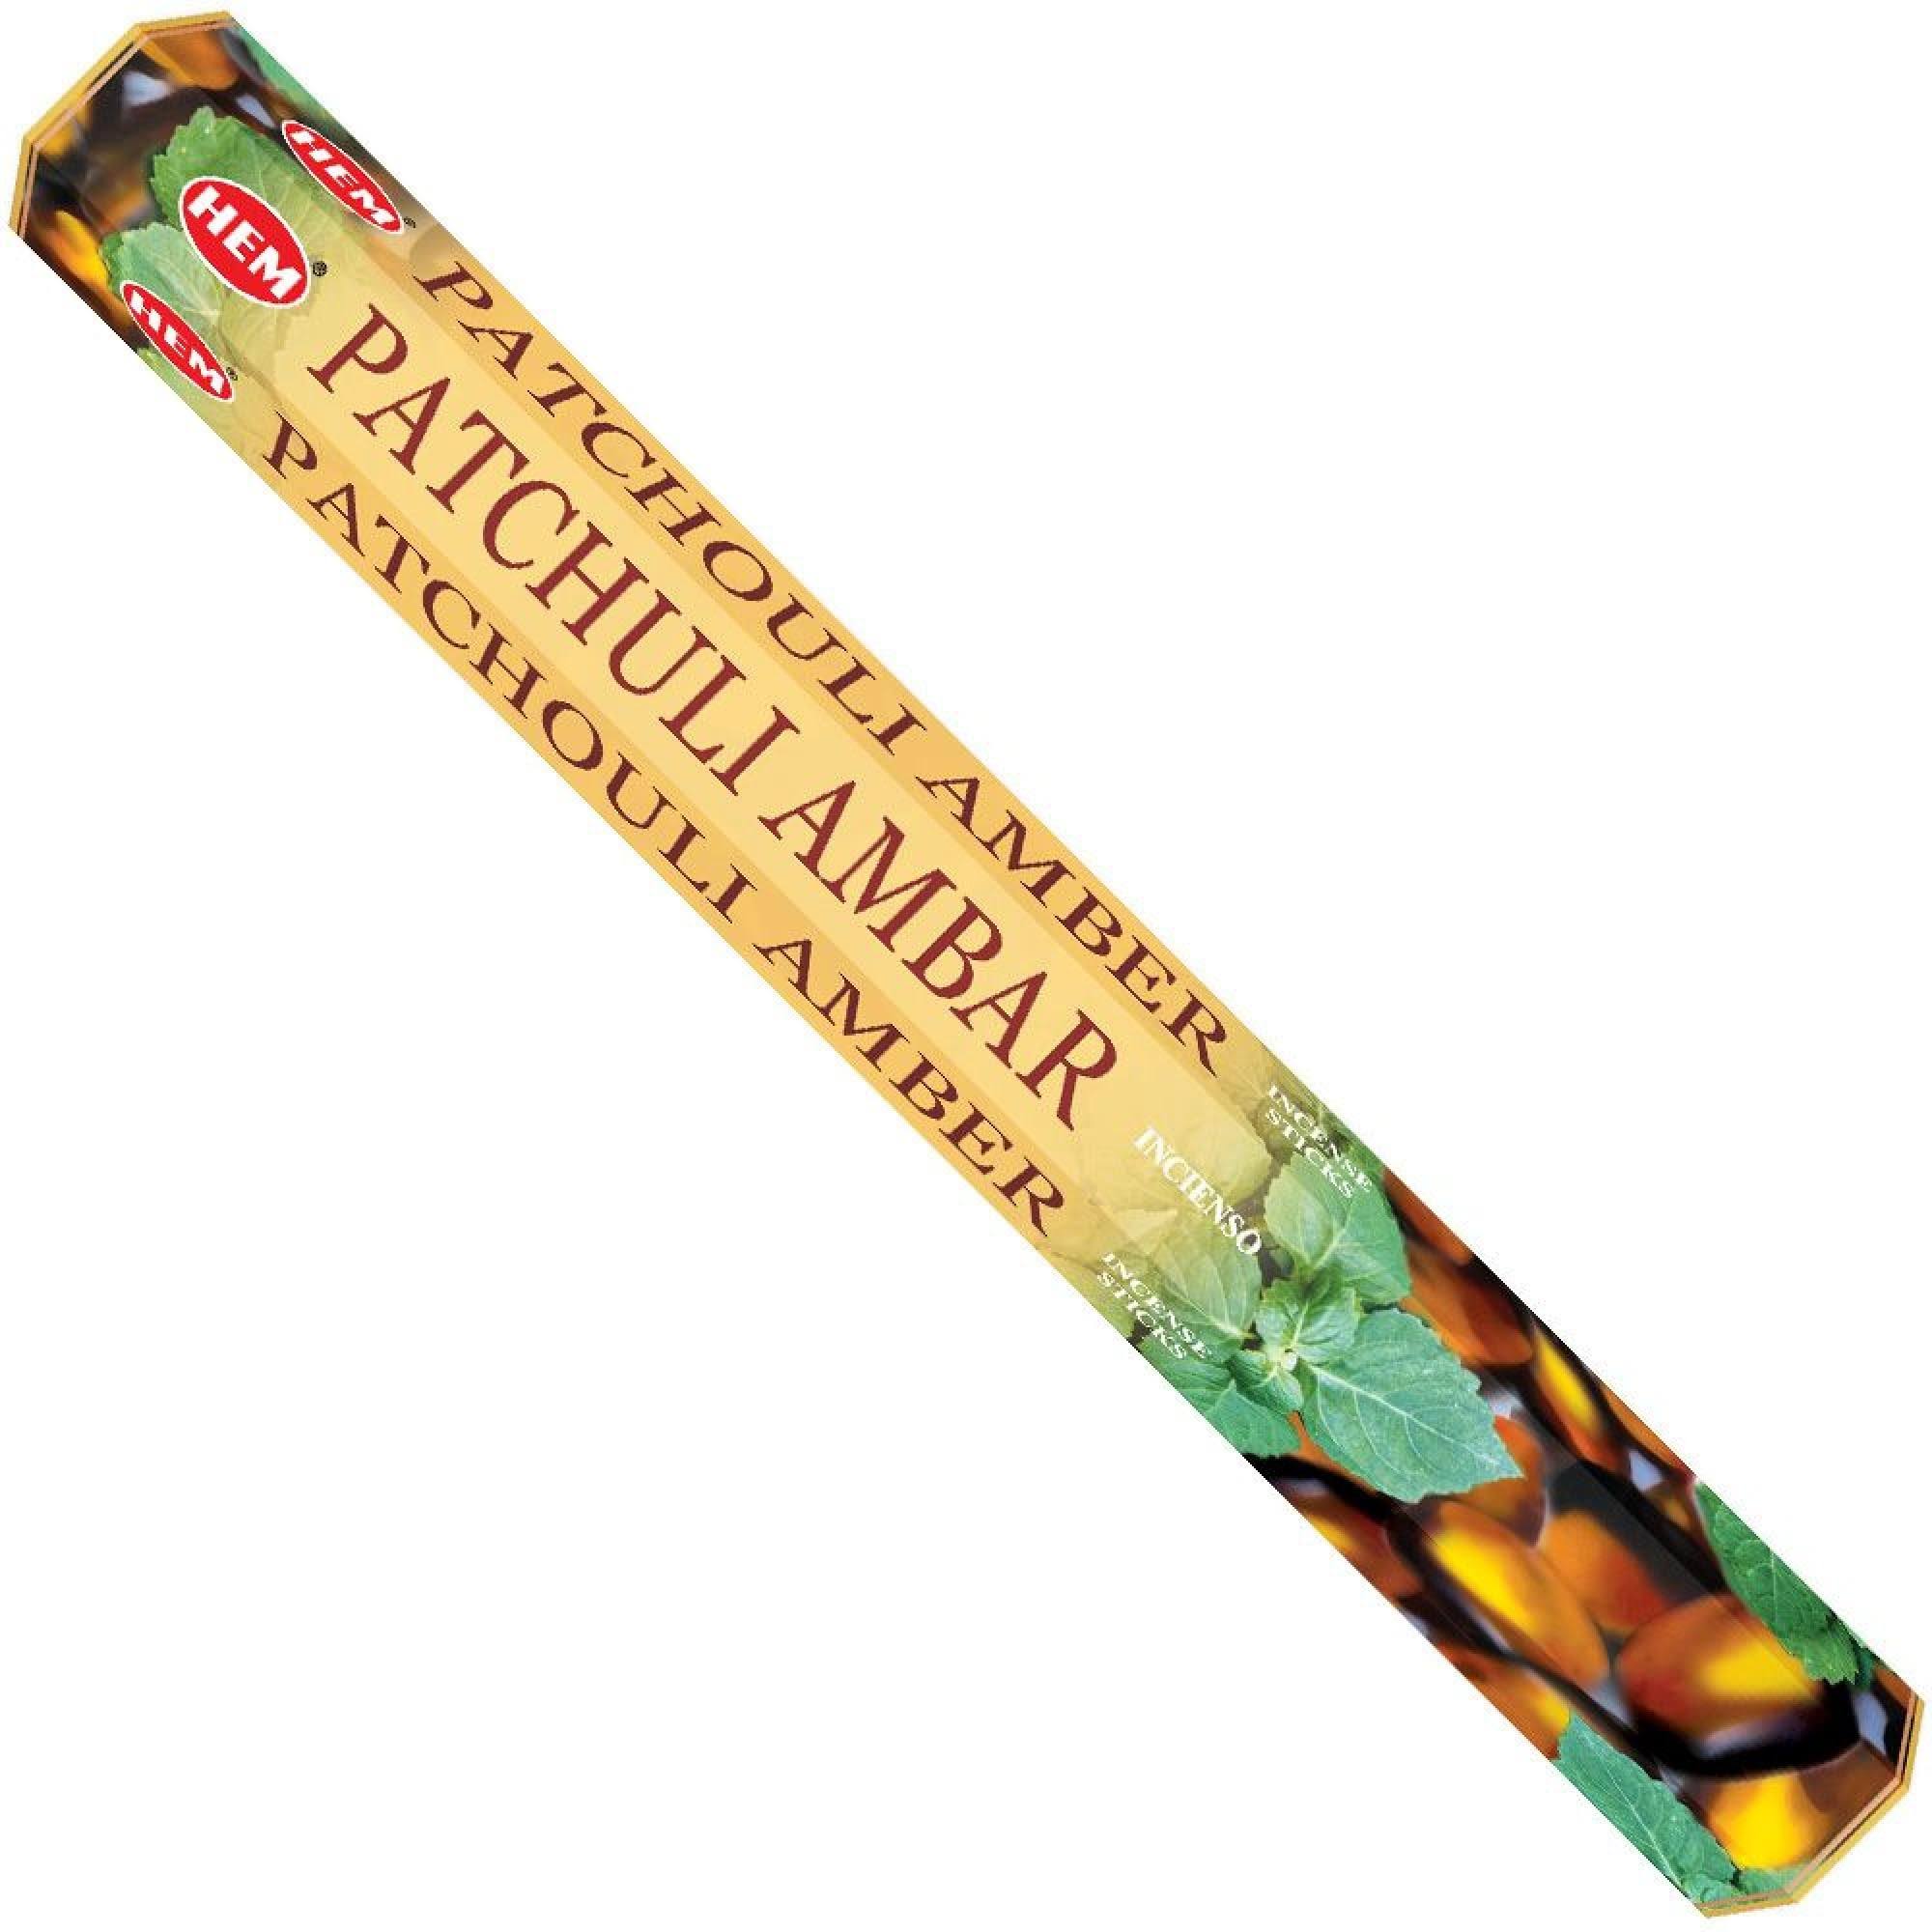 Hem - Hexagon - Patchouli Amber Incense Sticks 1 Pack